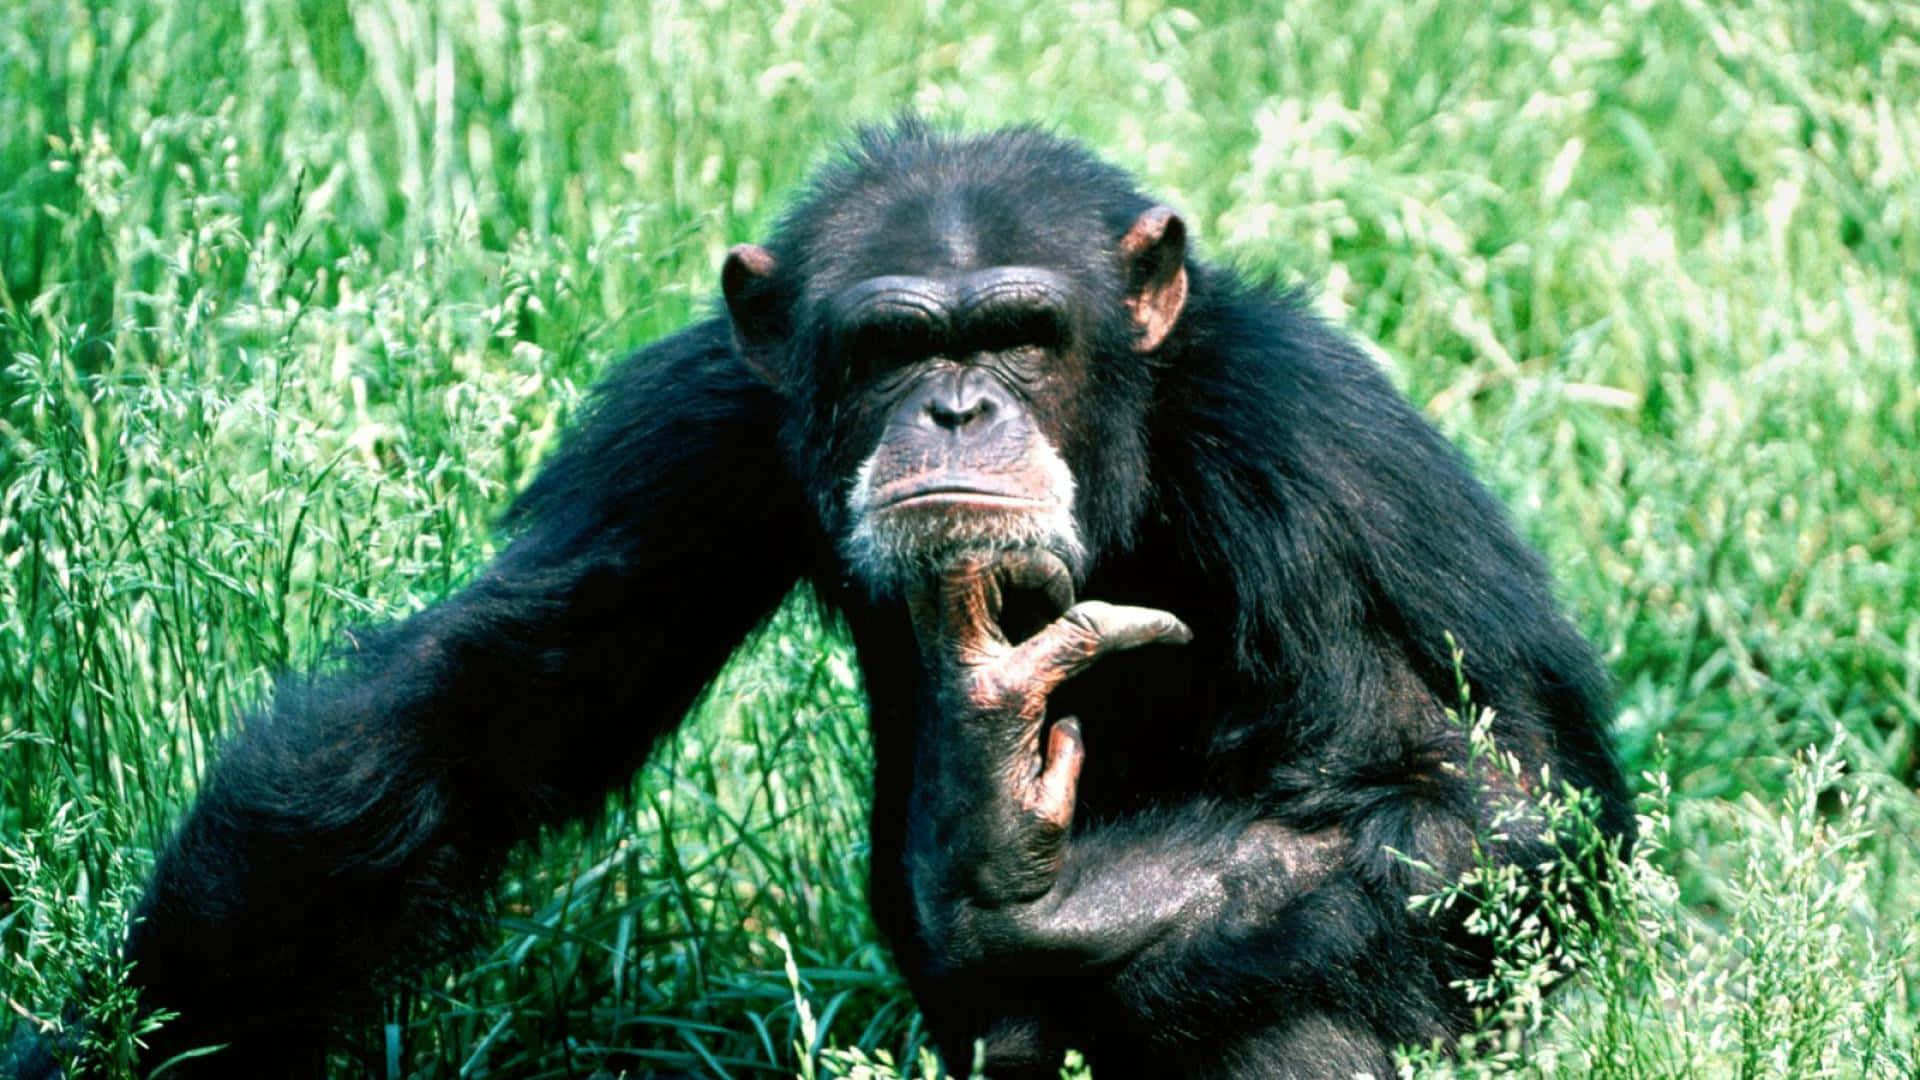 Chimpanzees having fun in their natural habitat.